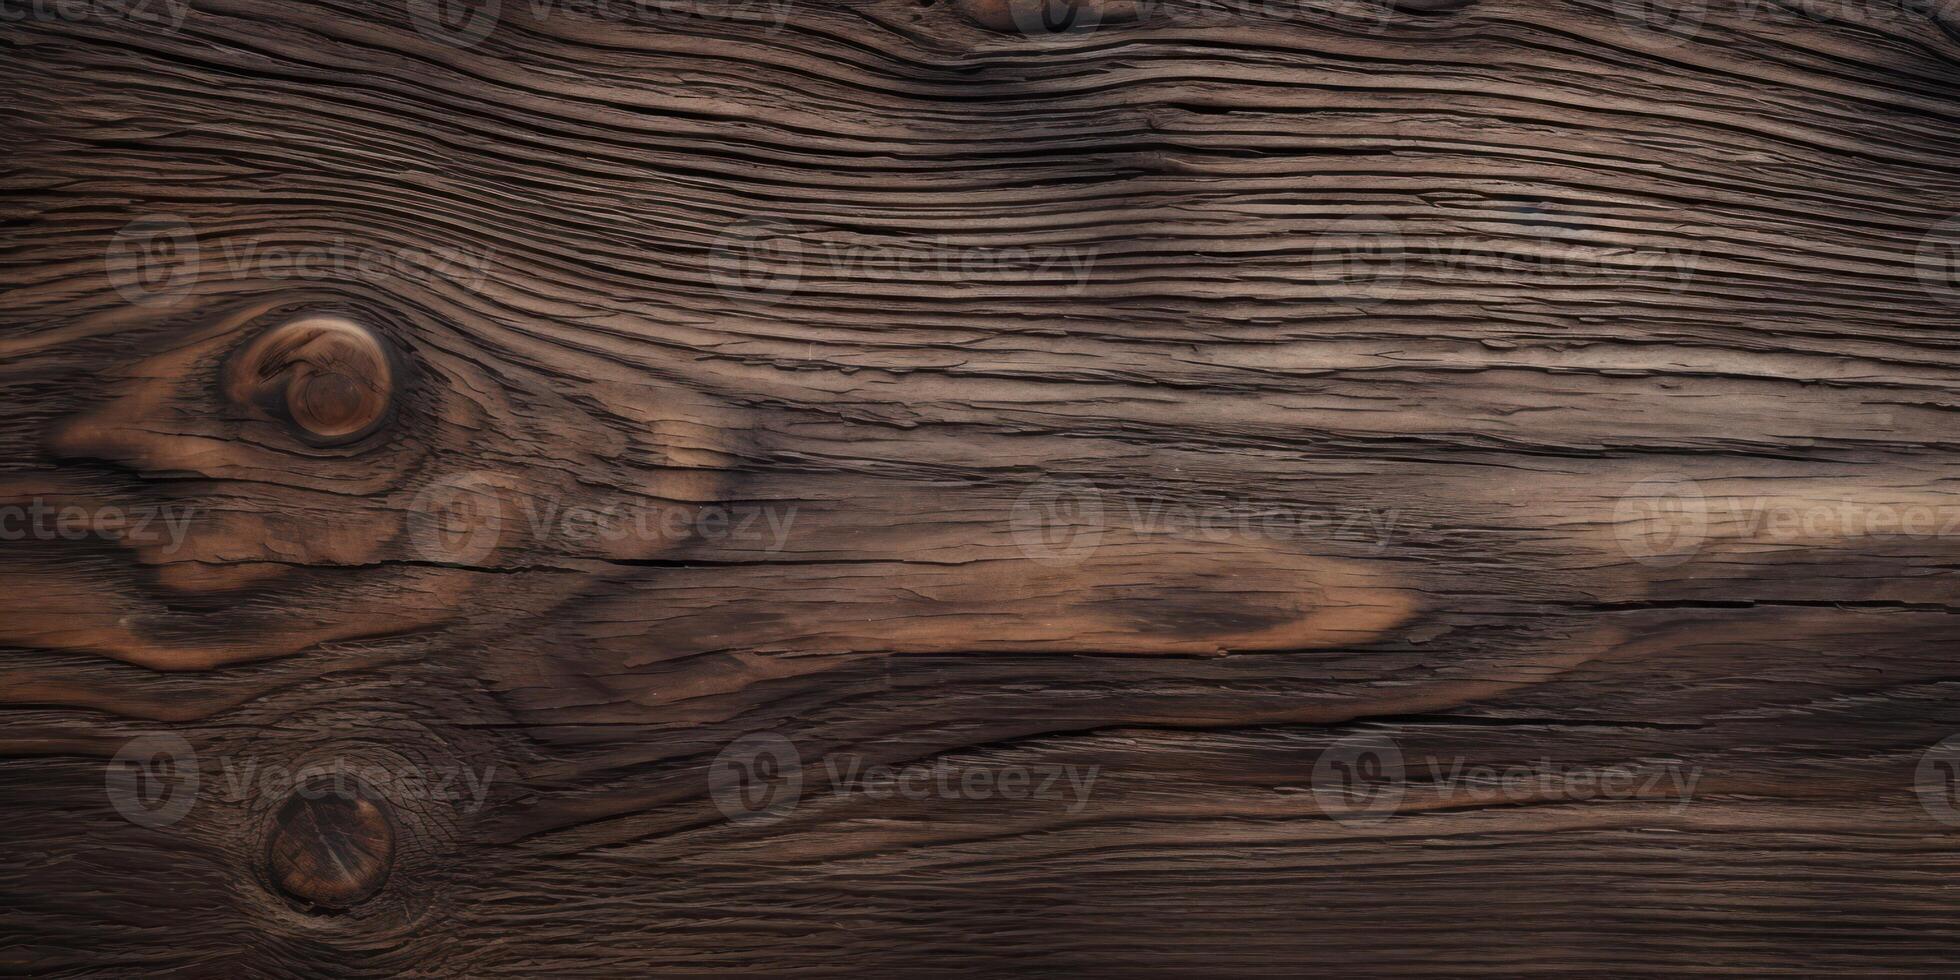 ai gegenereerd wijnoogst houten bord. donker grunge structuur achtergrond met hout patroon foto